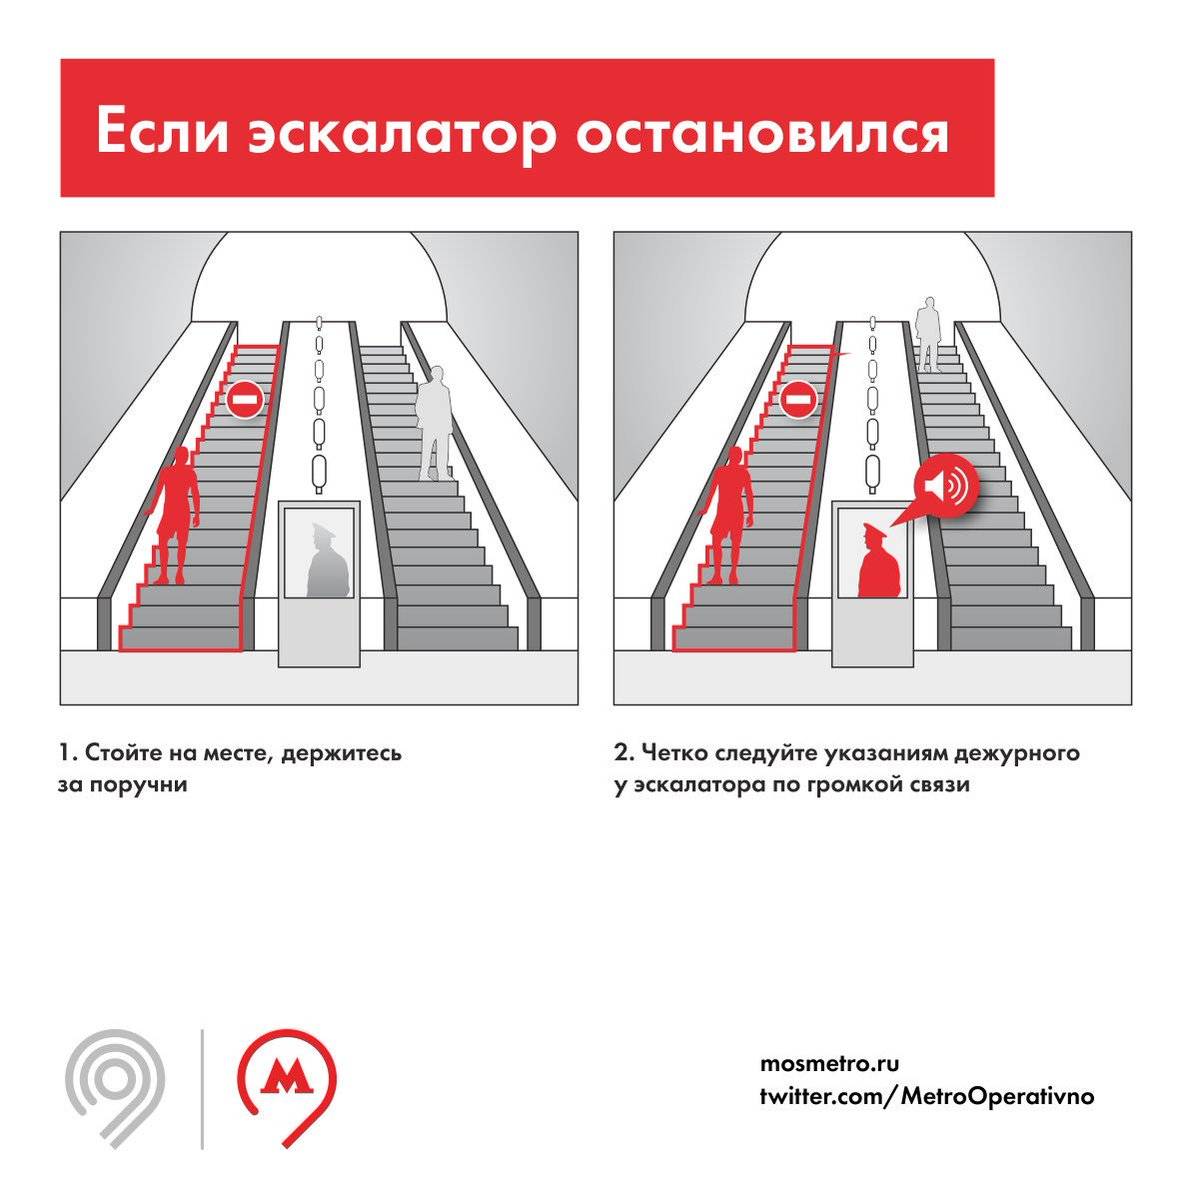 Правила поведения в метро кратко. правила безопасности в метро